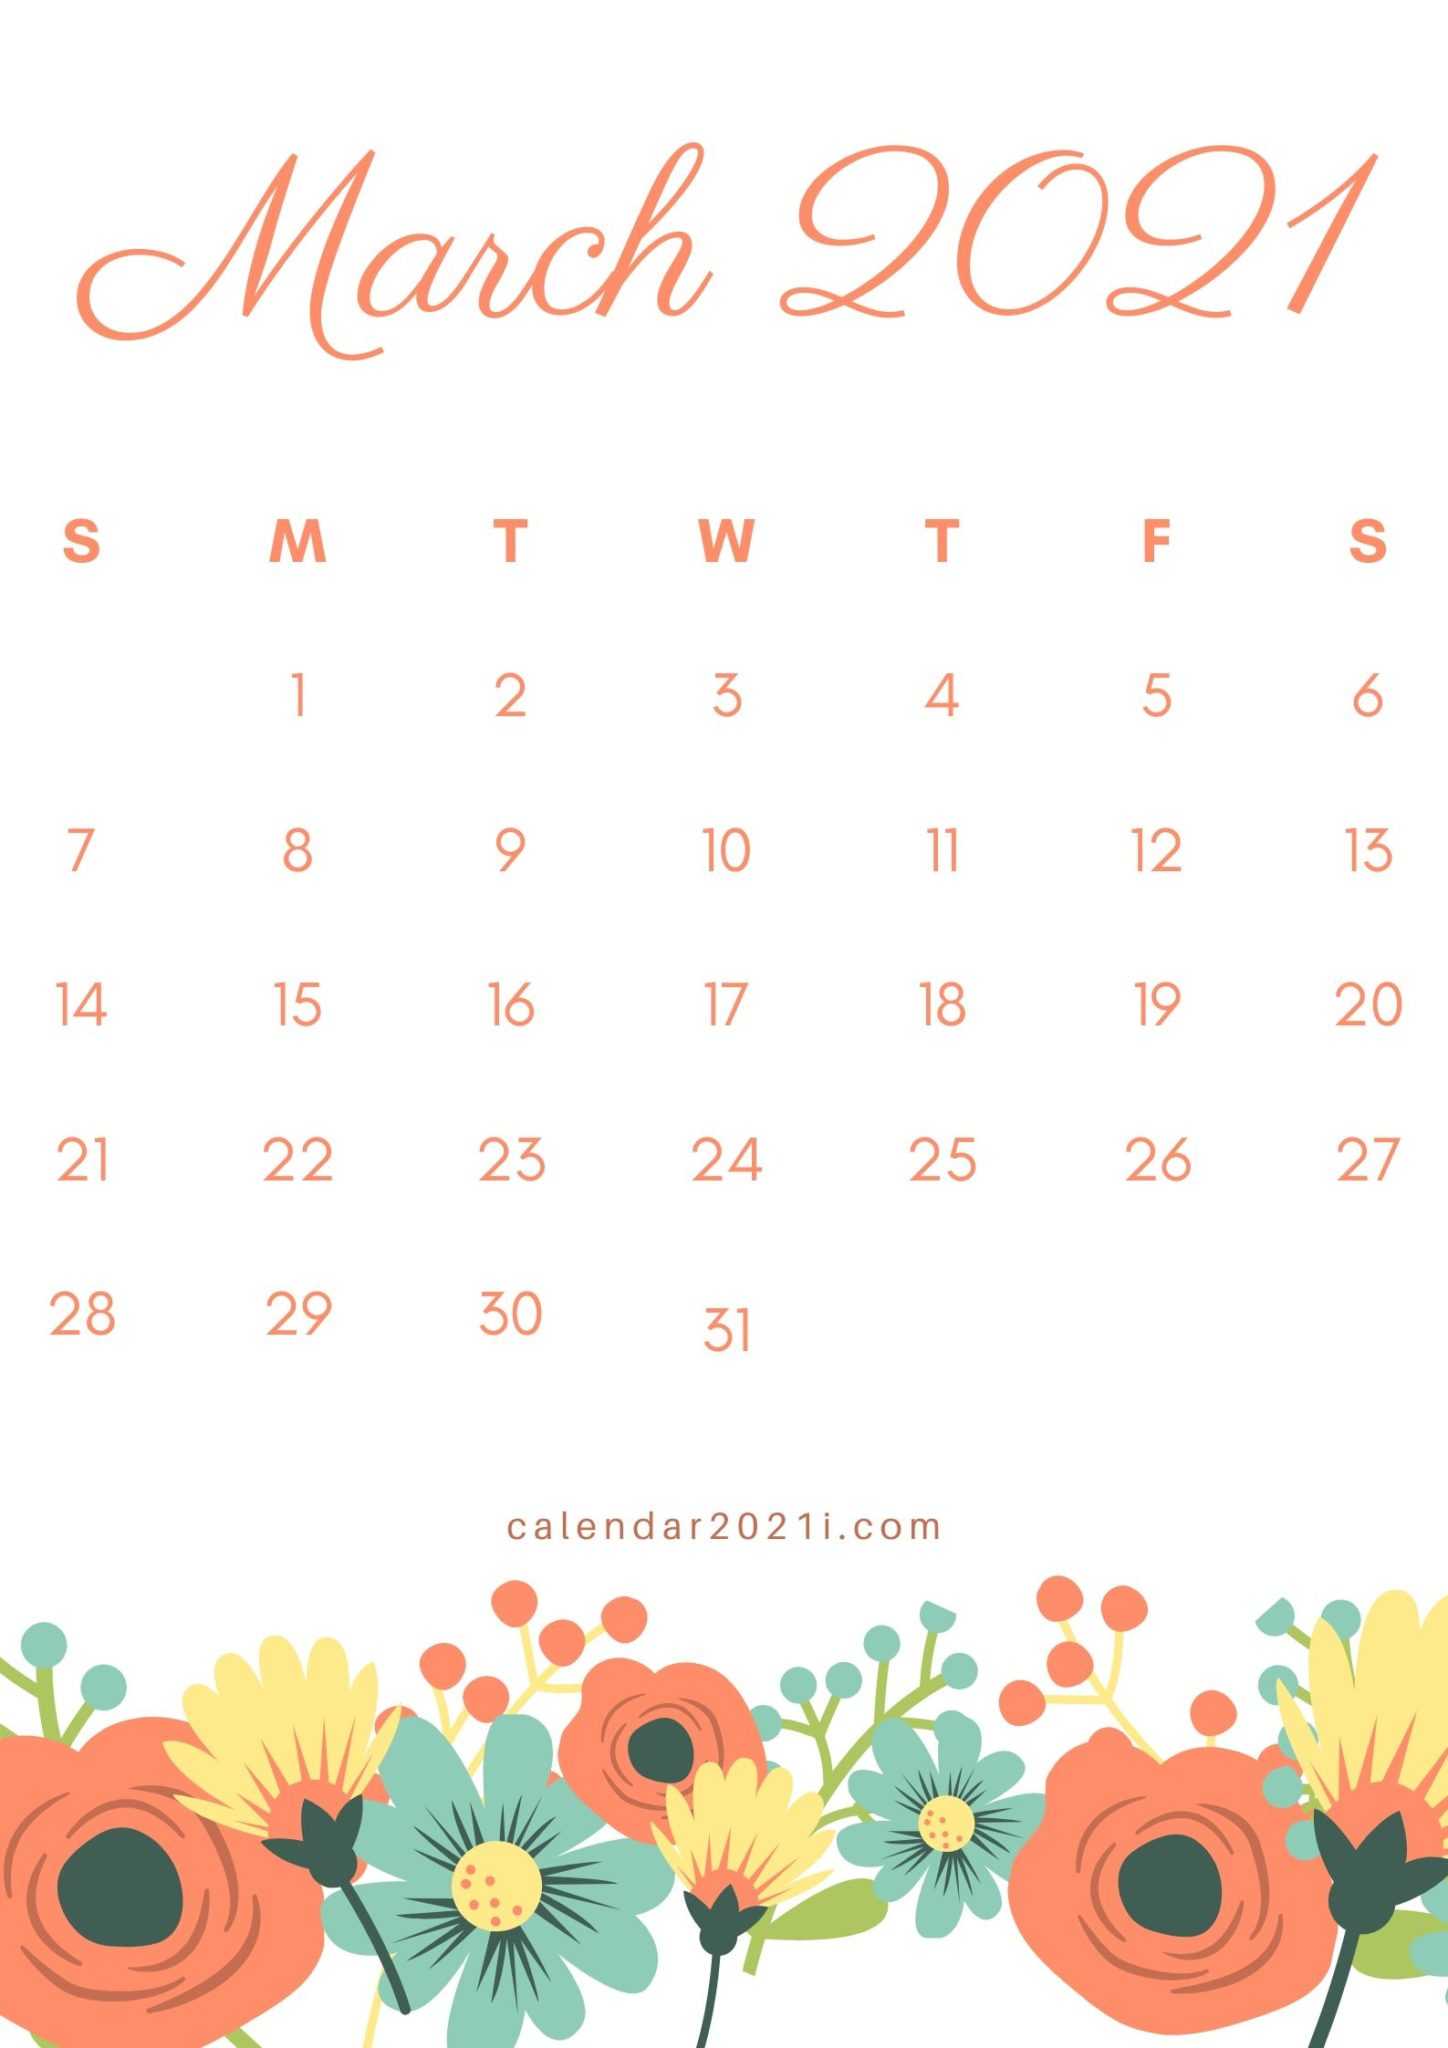 March 2021 Calendar Wallpaper - KoLPaPer - Awesome Free HD Wallpapers